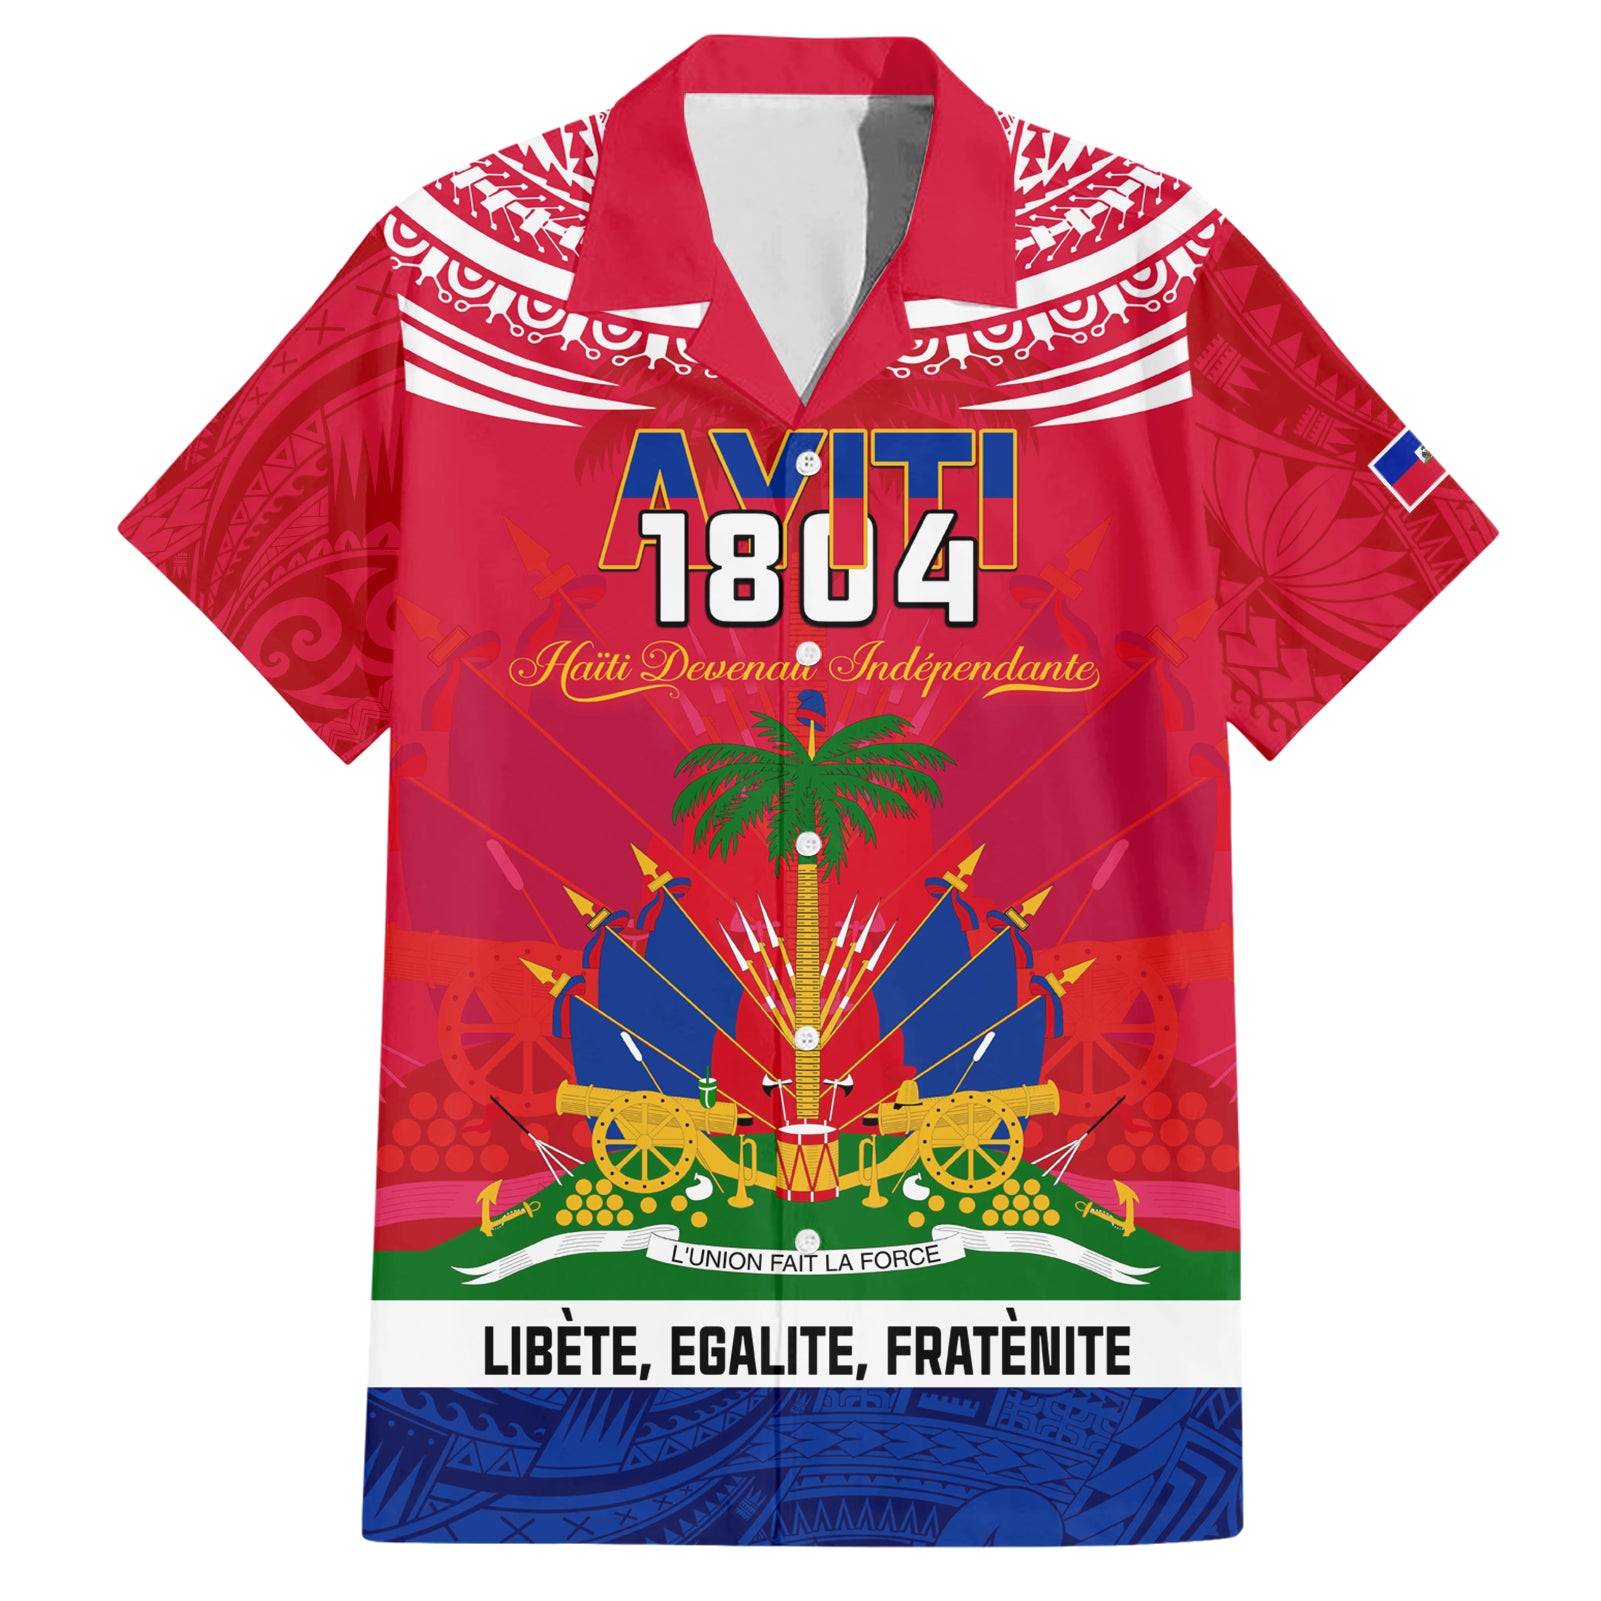 haiti-independence-day-hawaiian-shirt-libete-egalite-fratenite-ayiti-1804-with-polynesian-pattern